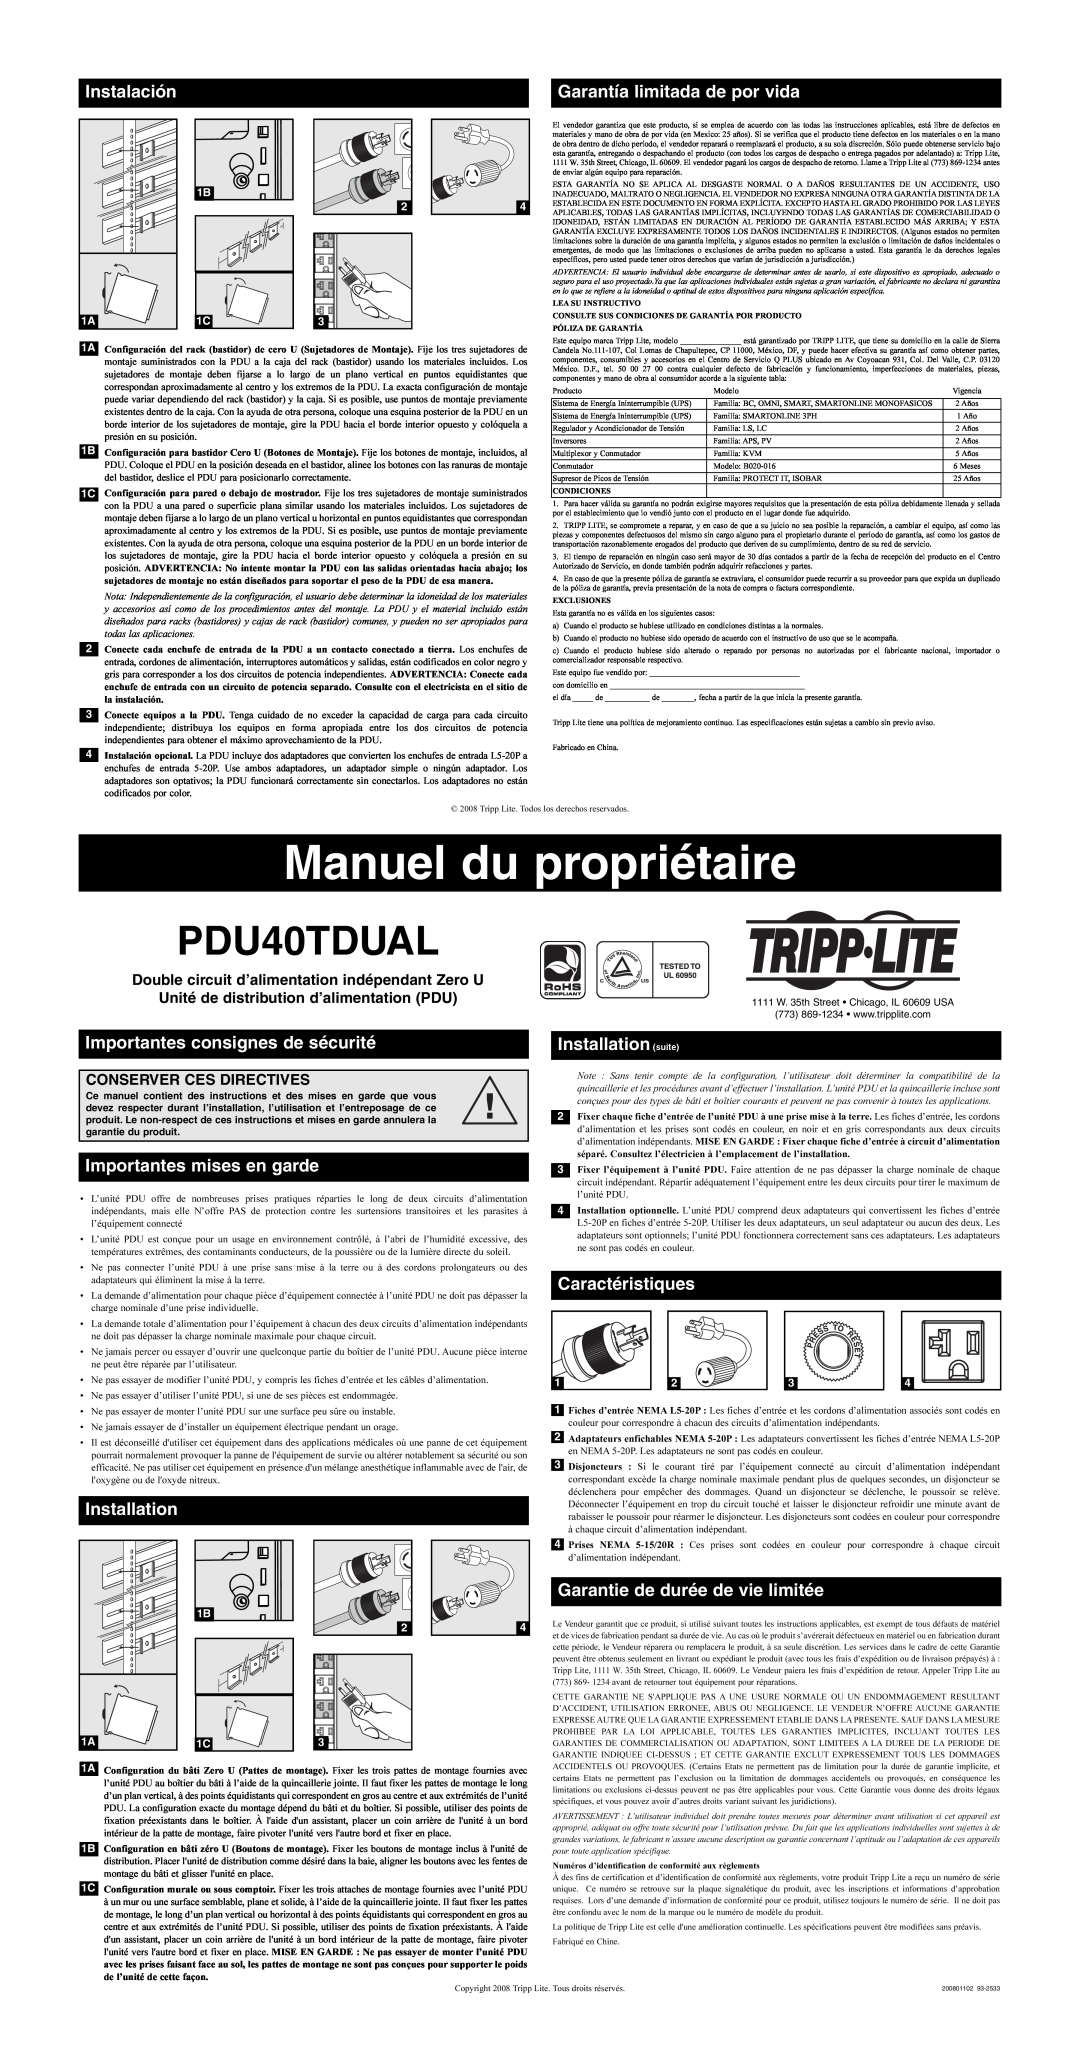 Tripp Lite PDU40TDUAL owner manual Manuel du propriétaire, Garantía limitada de por vida, Importantes consignes de sécurité 